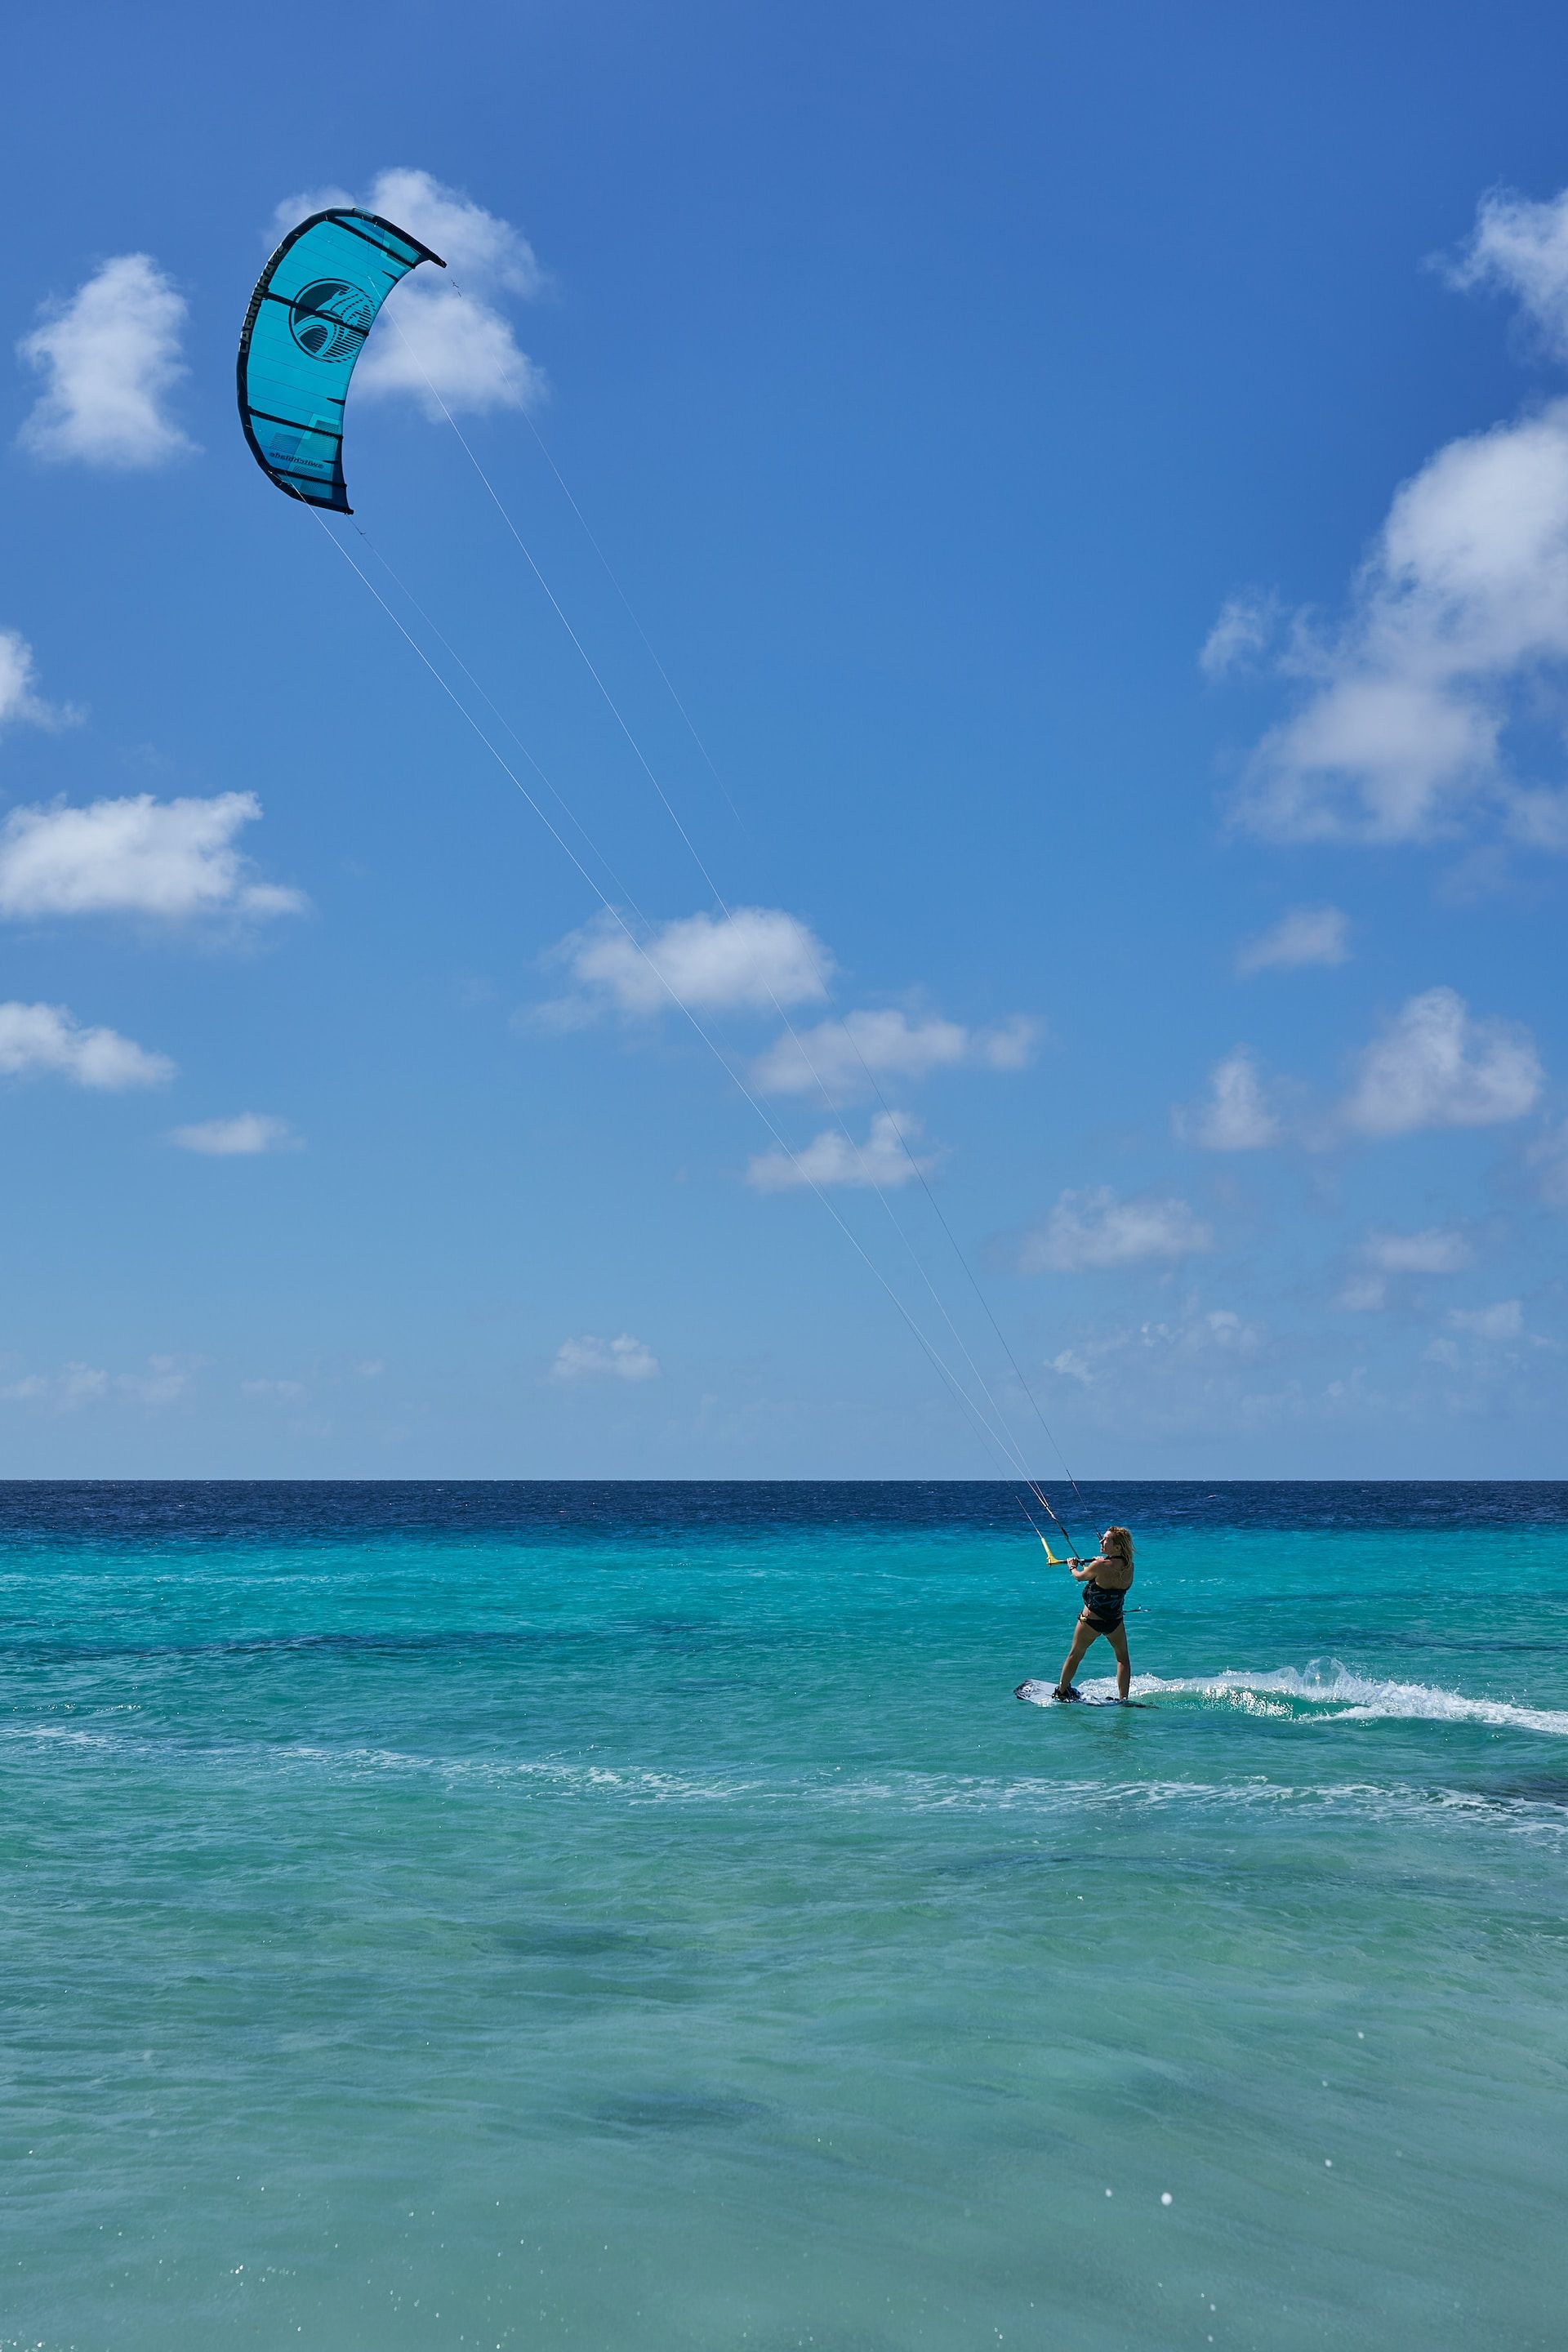 a thrill-seeker kitesurfing with blue kite 